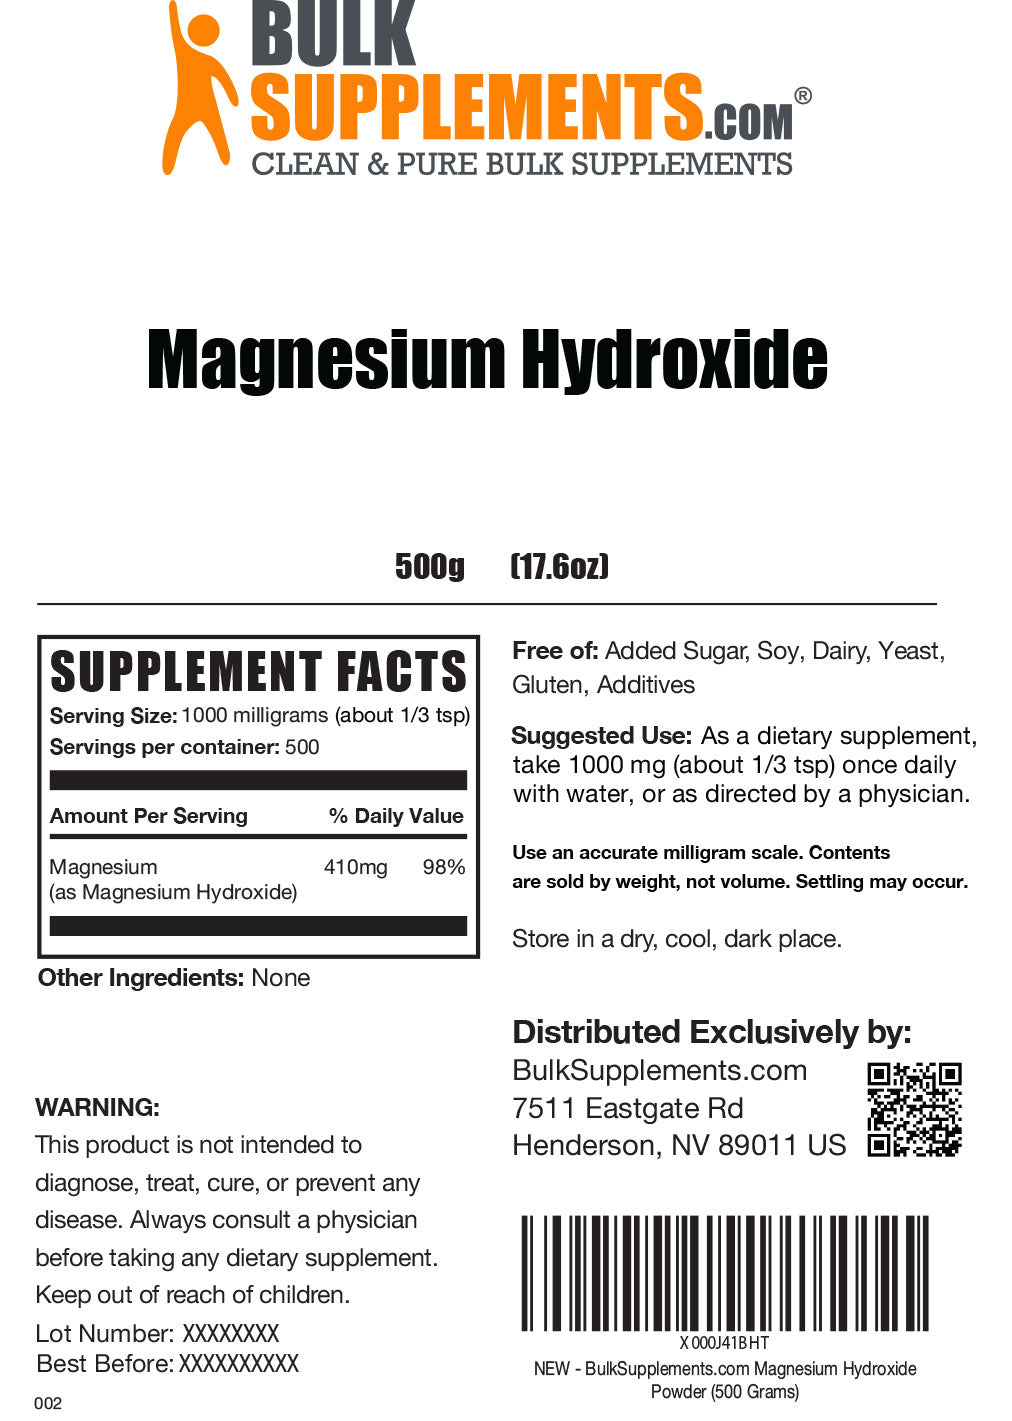 Magnesium Hydroxide powder label 500g